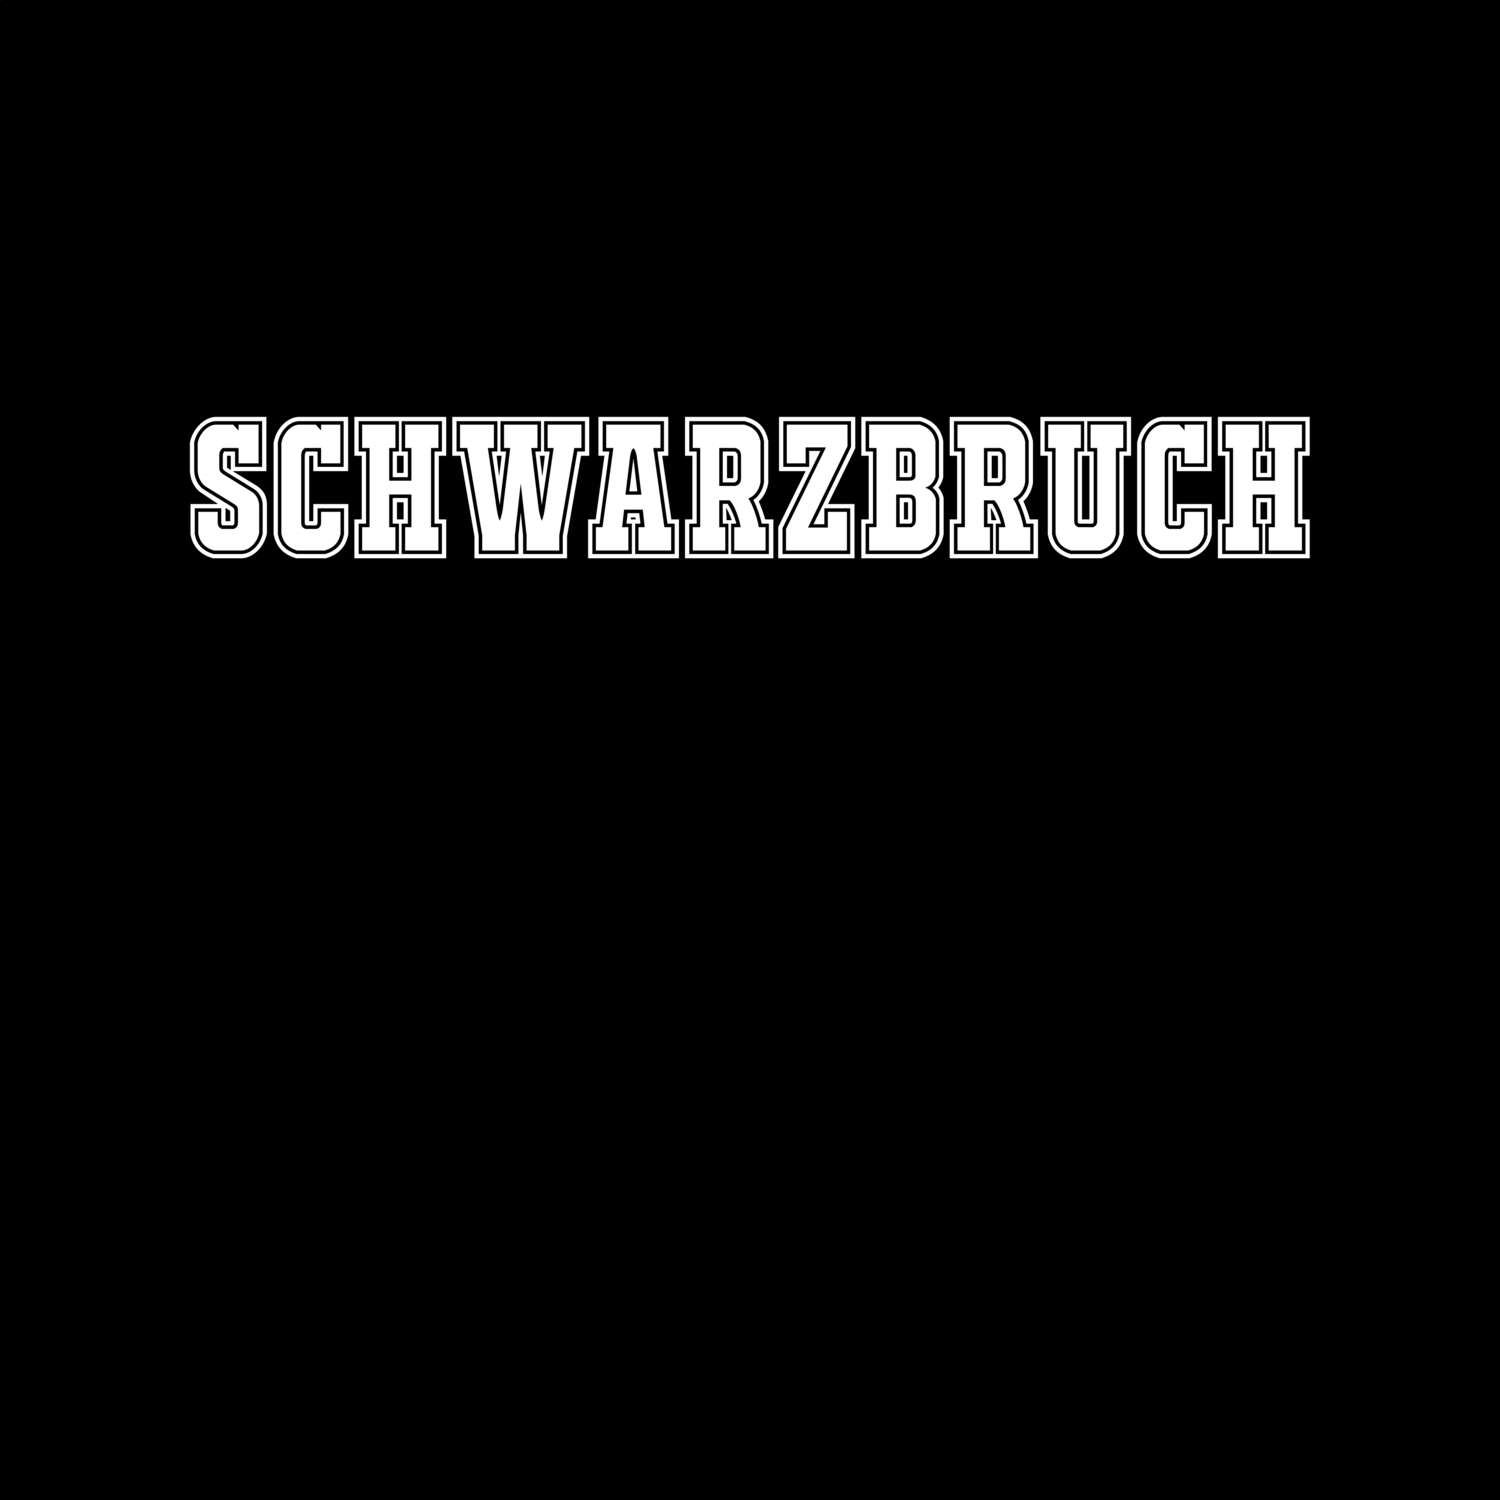 Schwarzbruch T-Shirt »Classic«